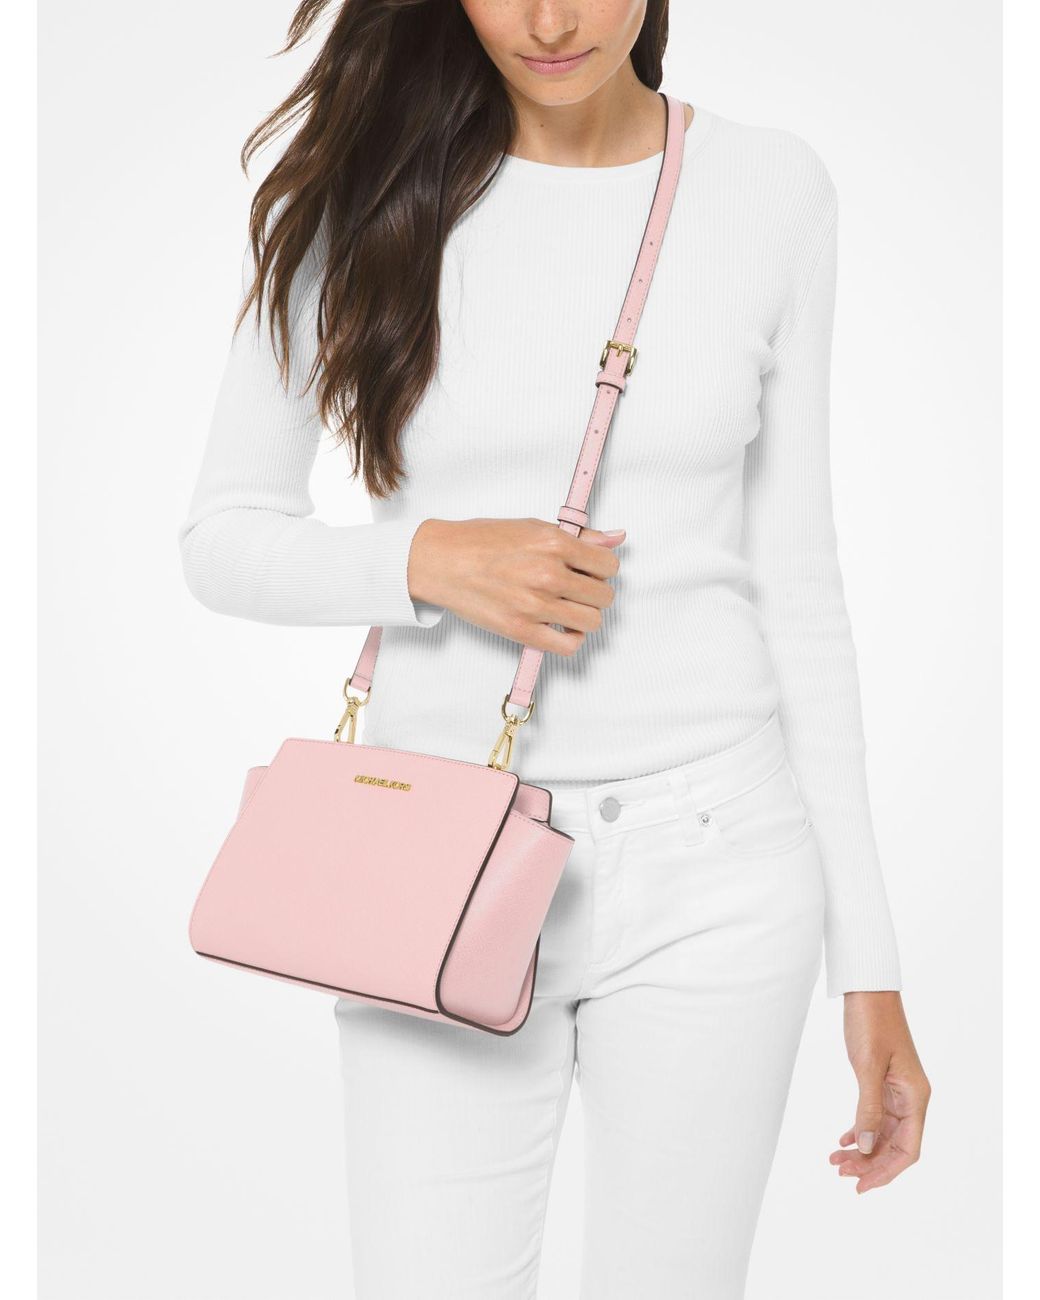 Michael Kors Selma Medium Saffiano Leather Crossbody Bag in Powder Blush ( Pink) | Lyst